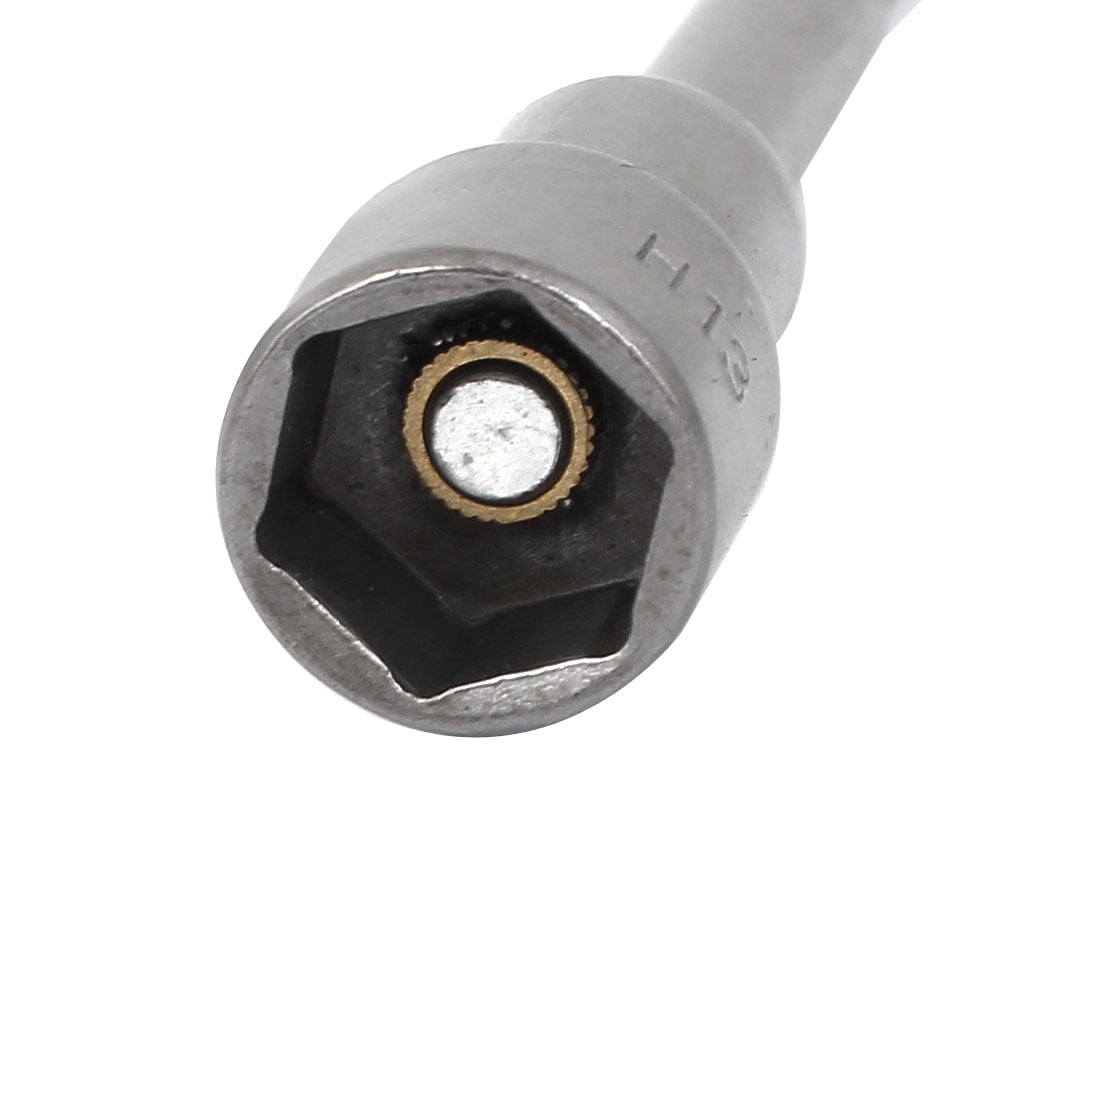 Metric 13mm Hex Socket Magnetic Nut Driver Set Adapter Drill Bit